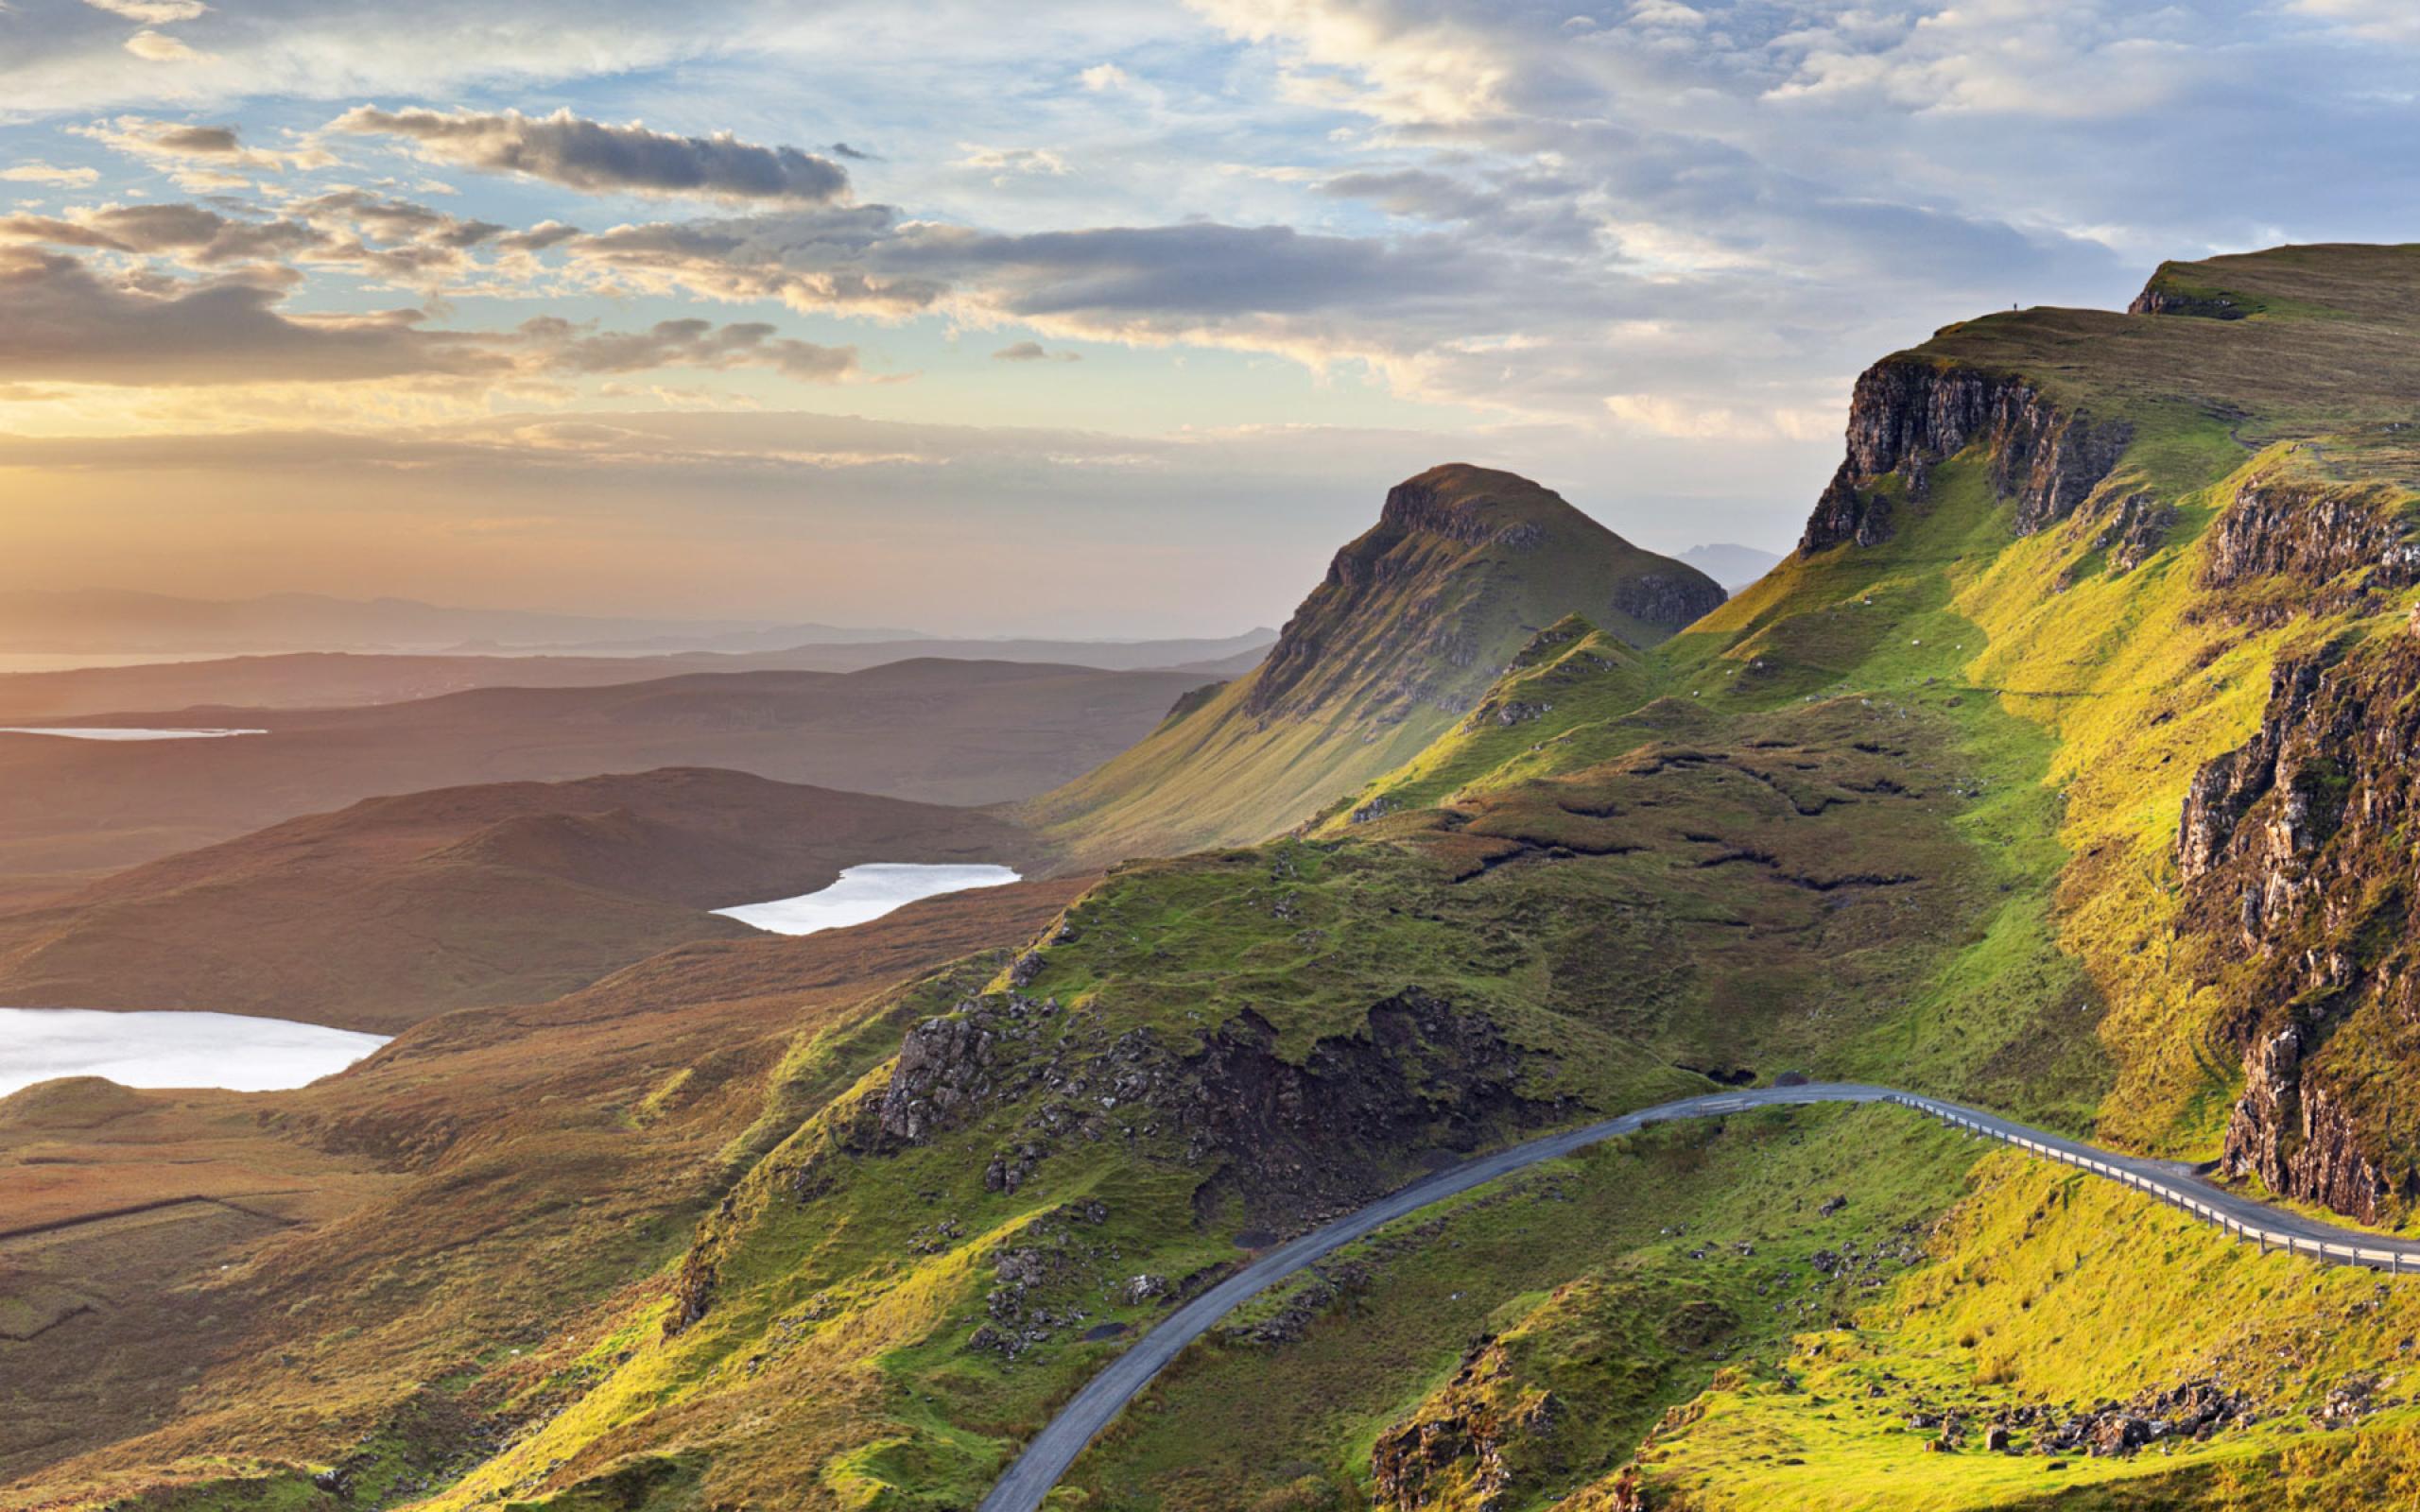 Scottish Landscape Wallpapers Best Wallpapers